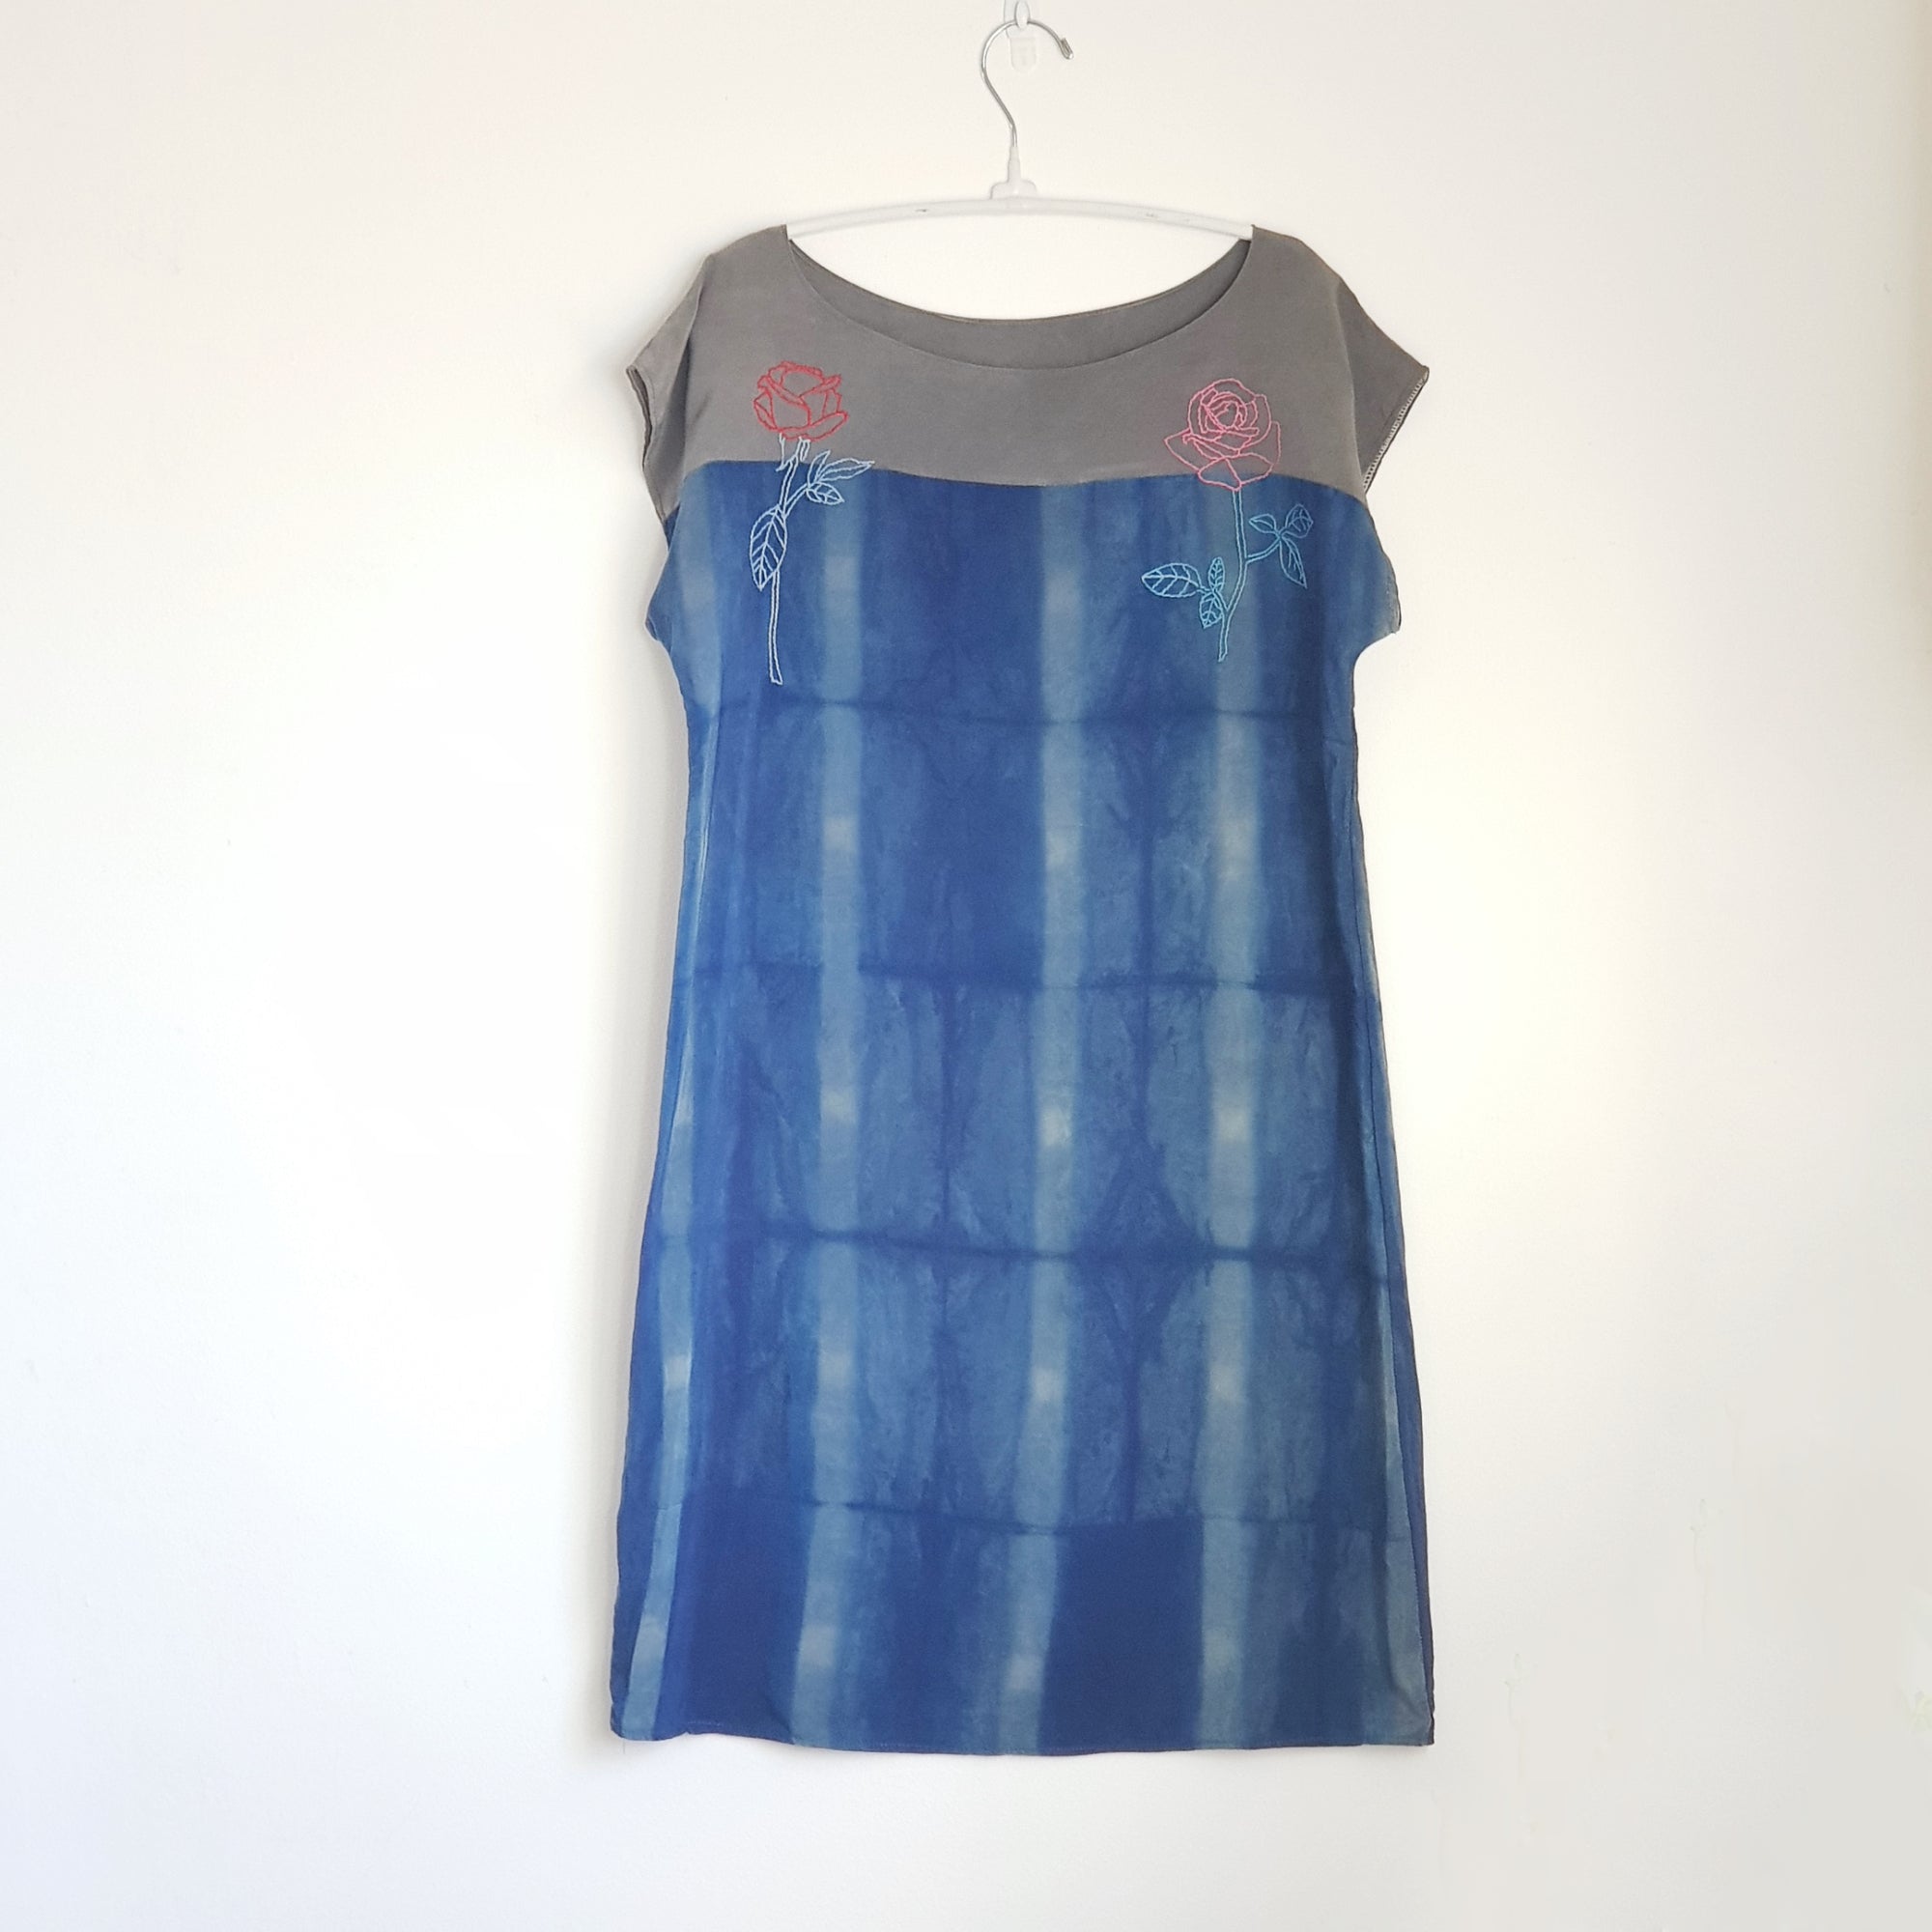 ROSE Embroidered organic dye Dress Indigo & Soot ink Small/medium